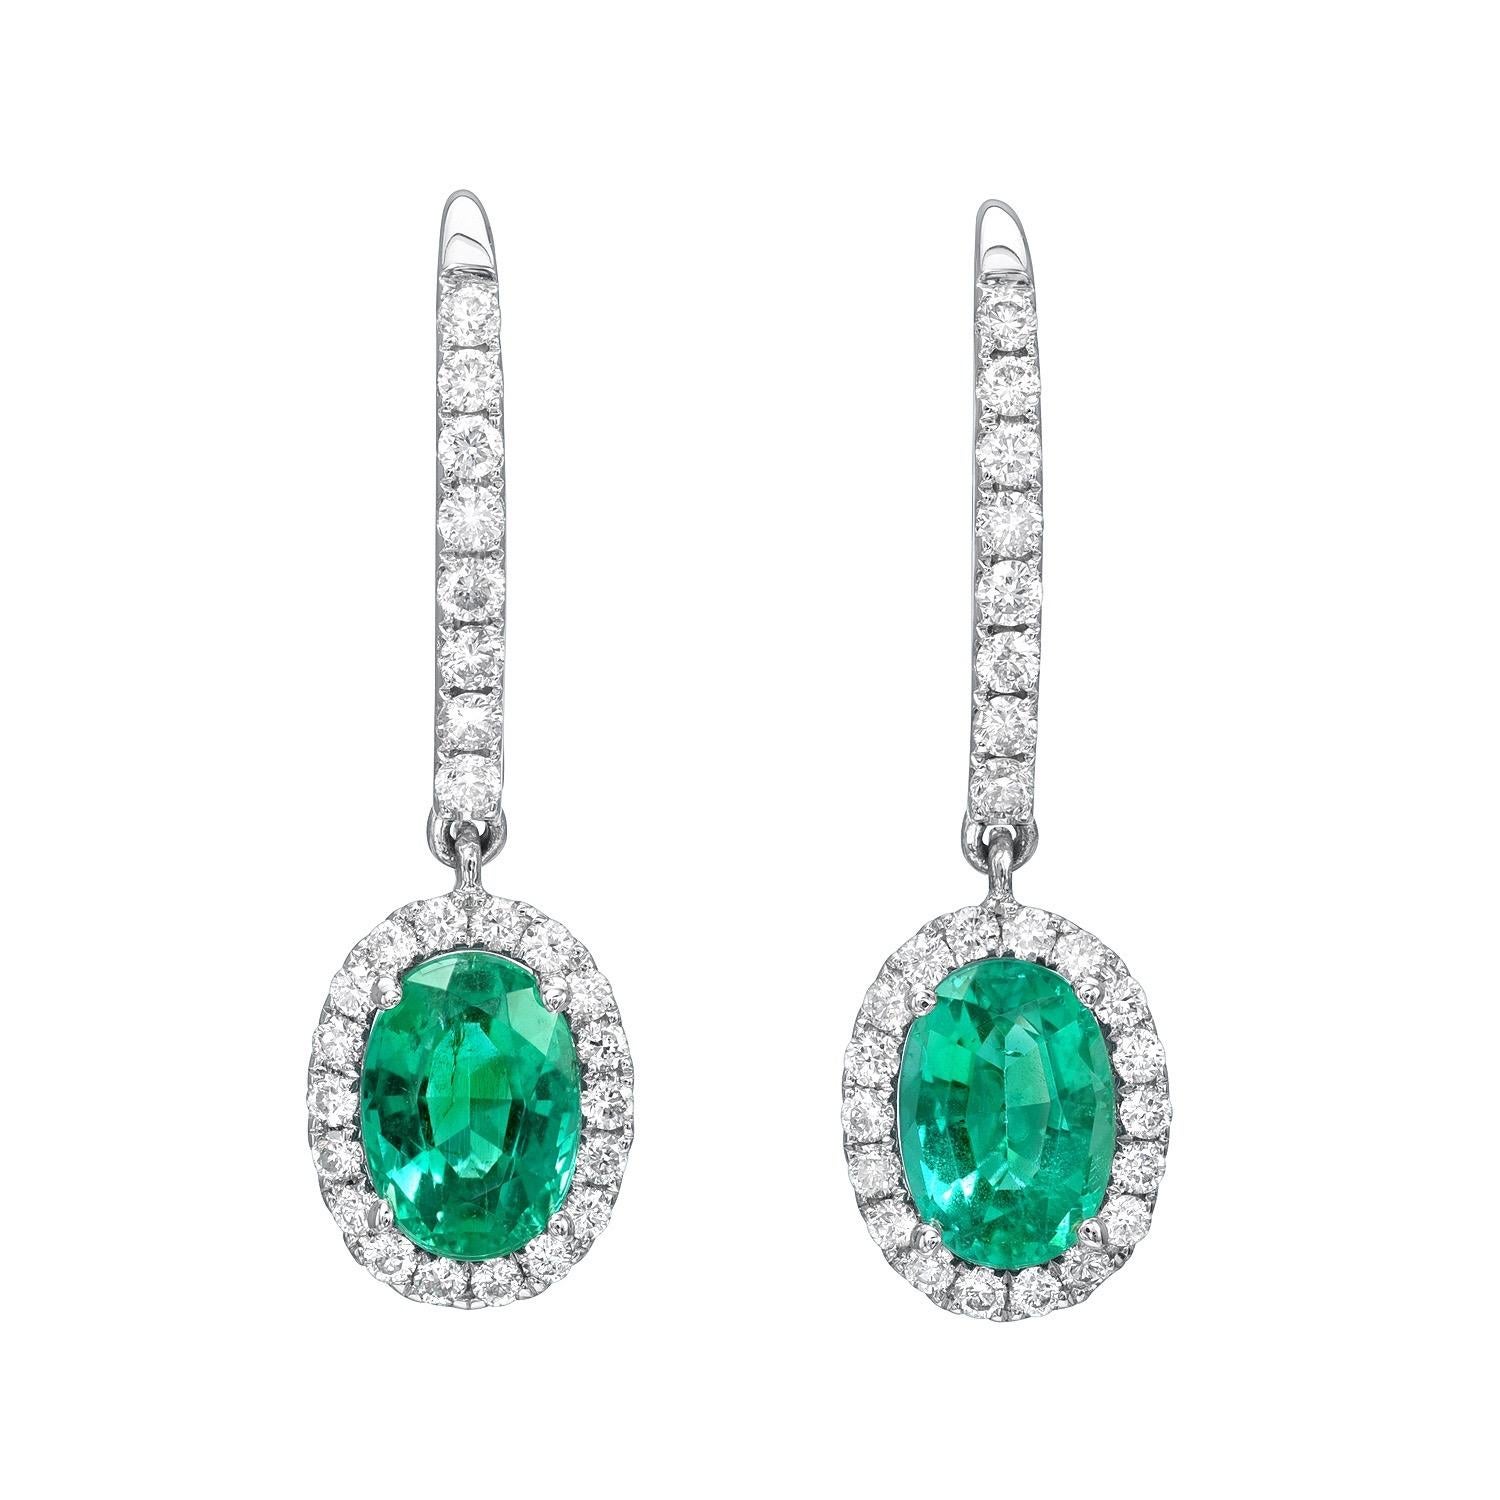 Contemporary Emerald Earrings 1.50 Carat Ovals